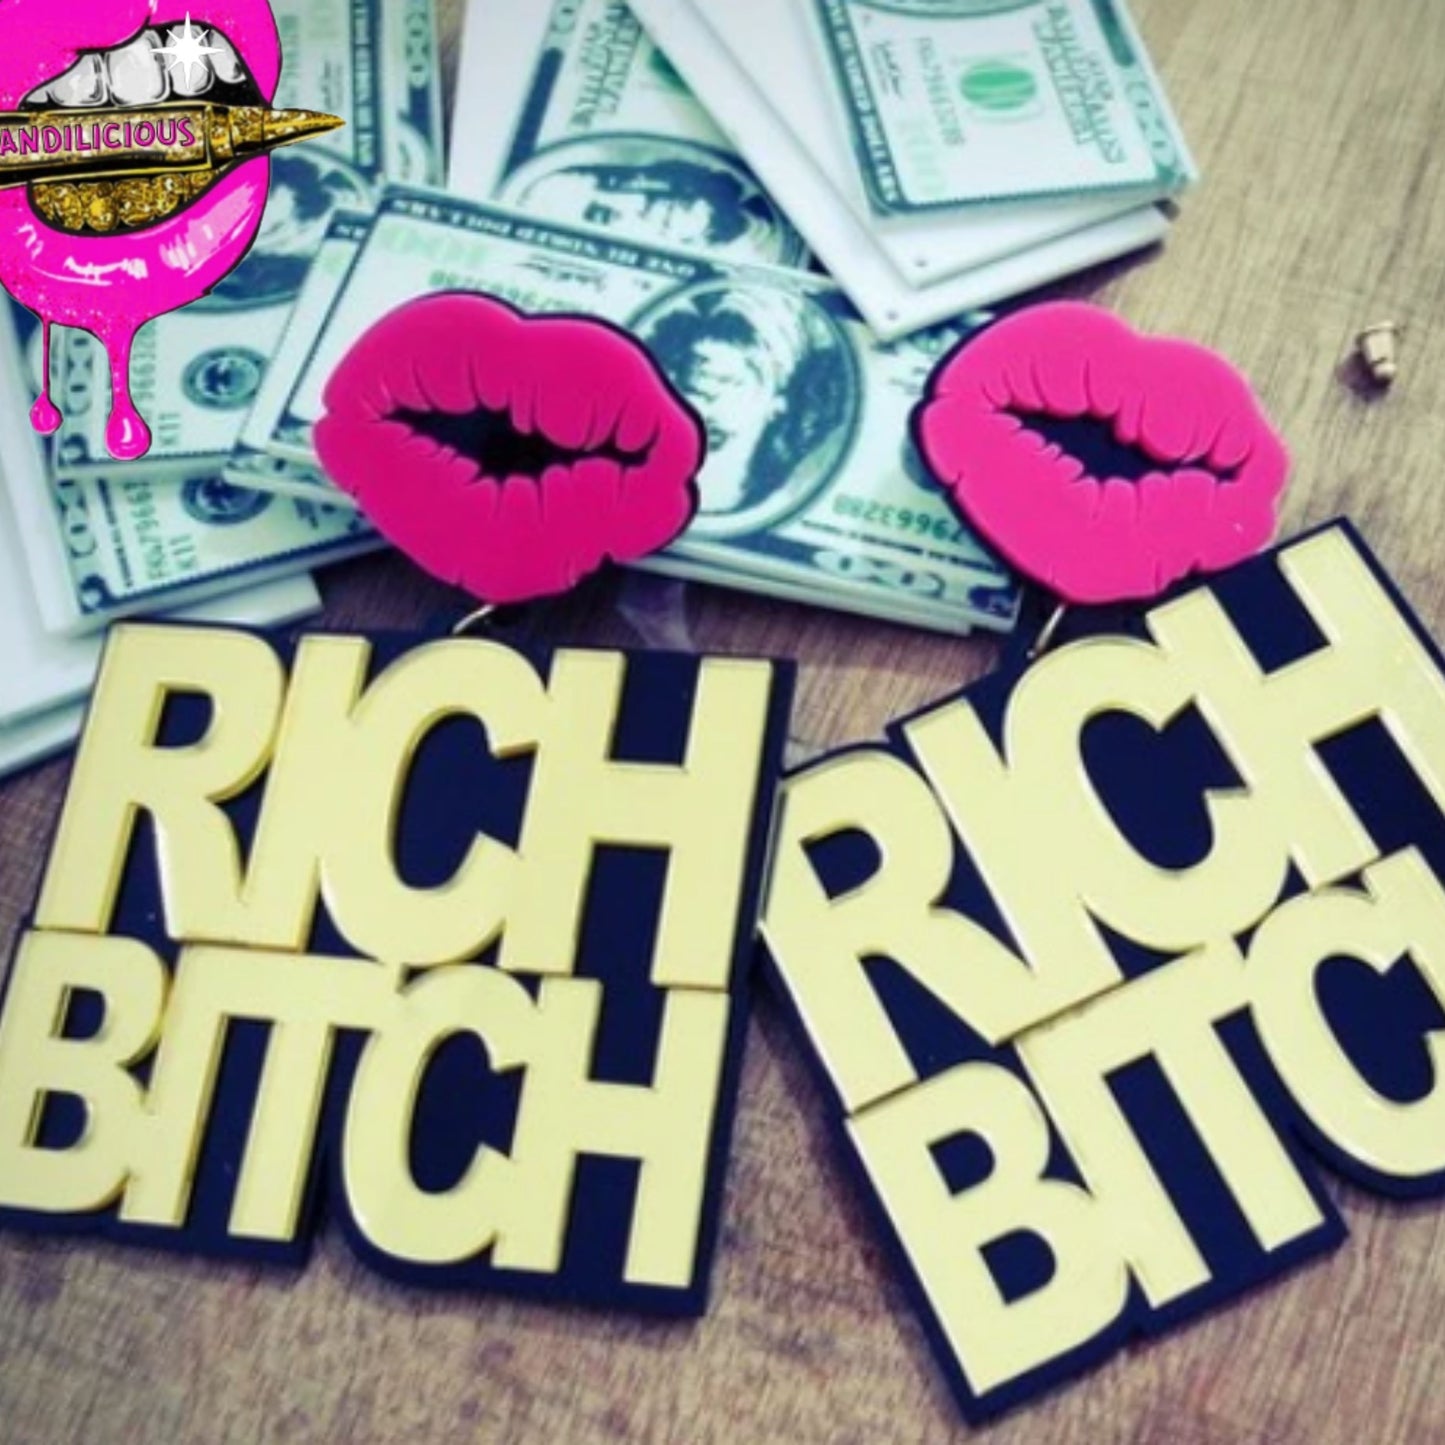 Rich B*tch Club Culture Bold Loud Statement Fashion Earrings